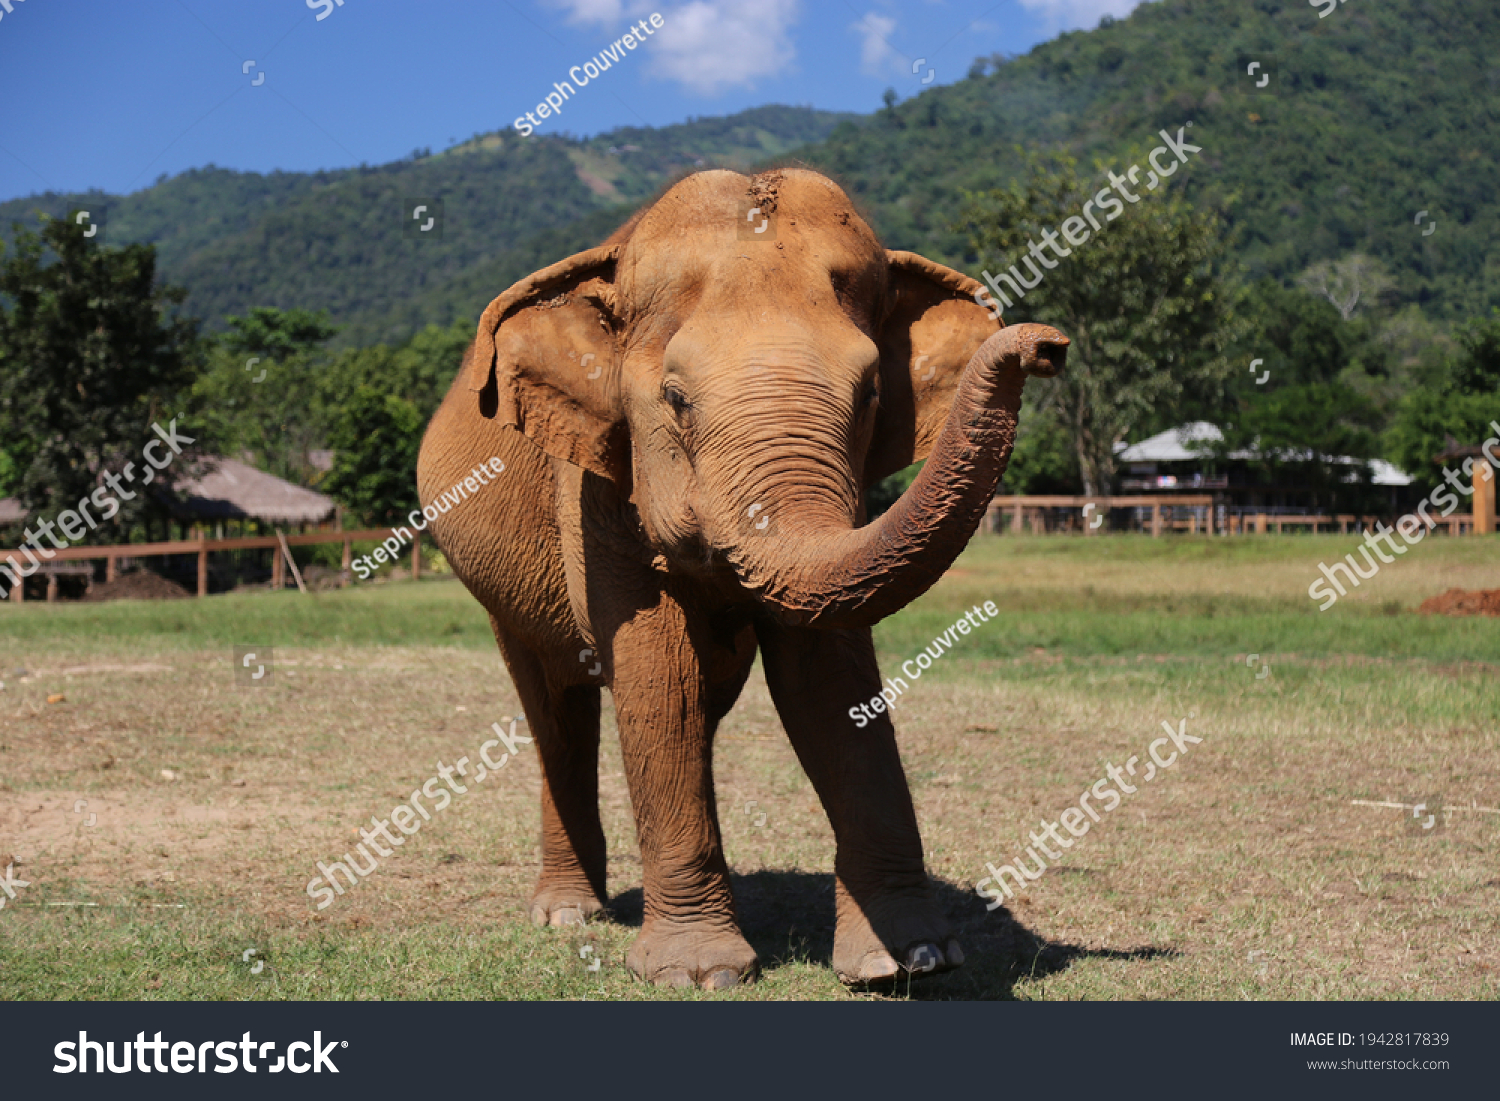 Elephant at Elephant Sanctuary Outside Chiang Mai, Thailand - Trunk Up Sideways #1942817839